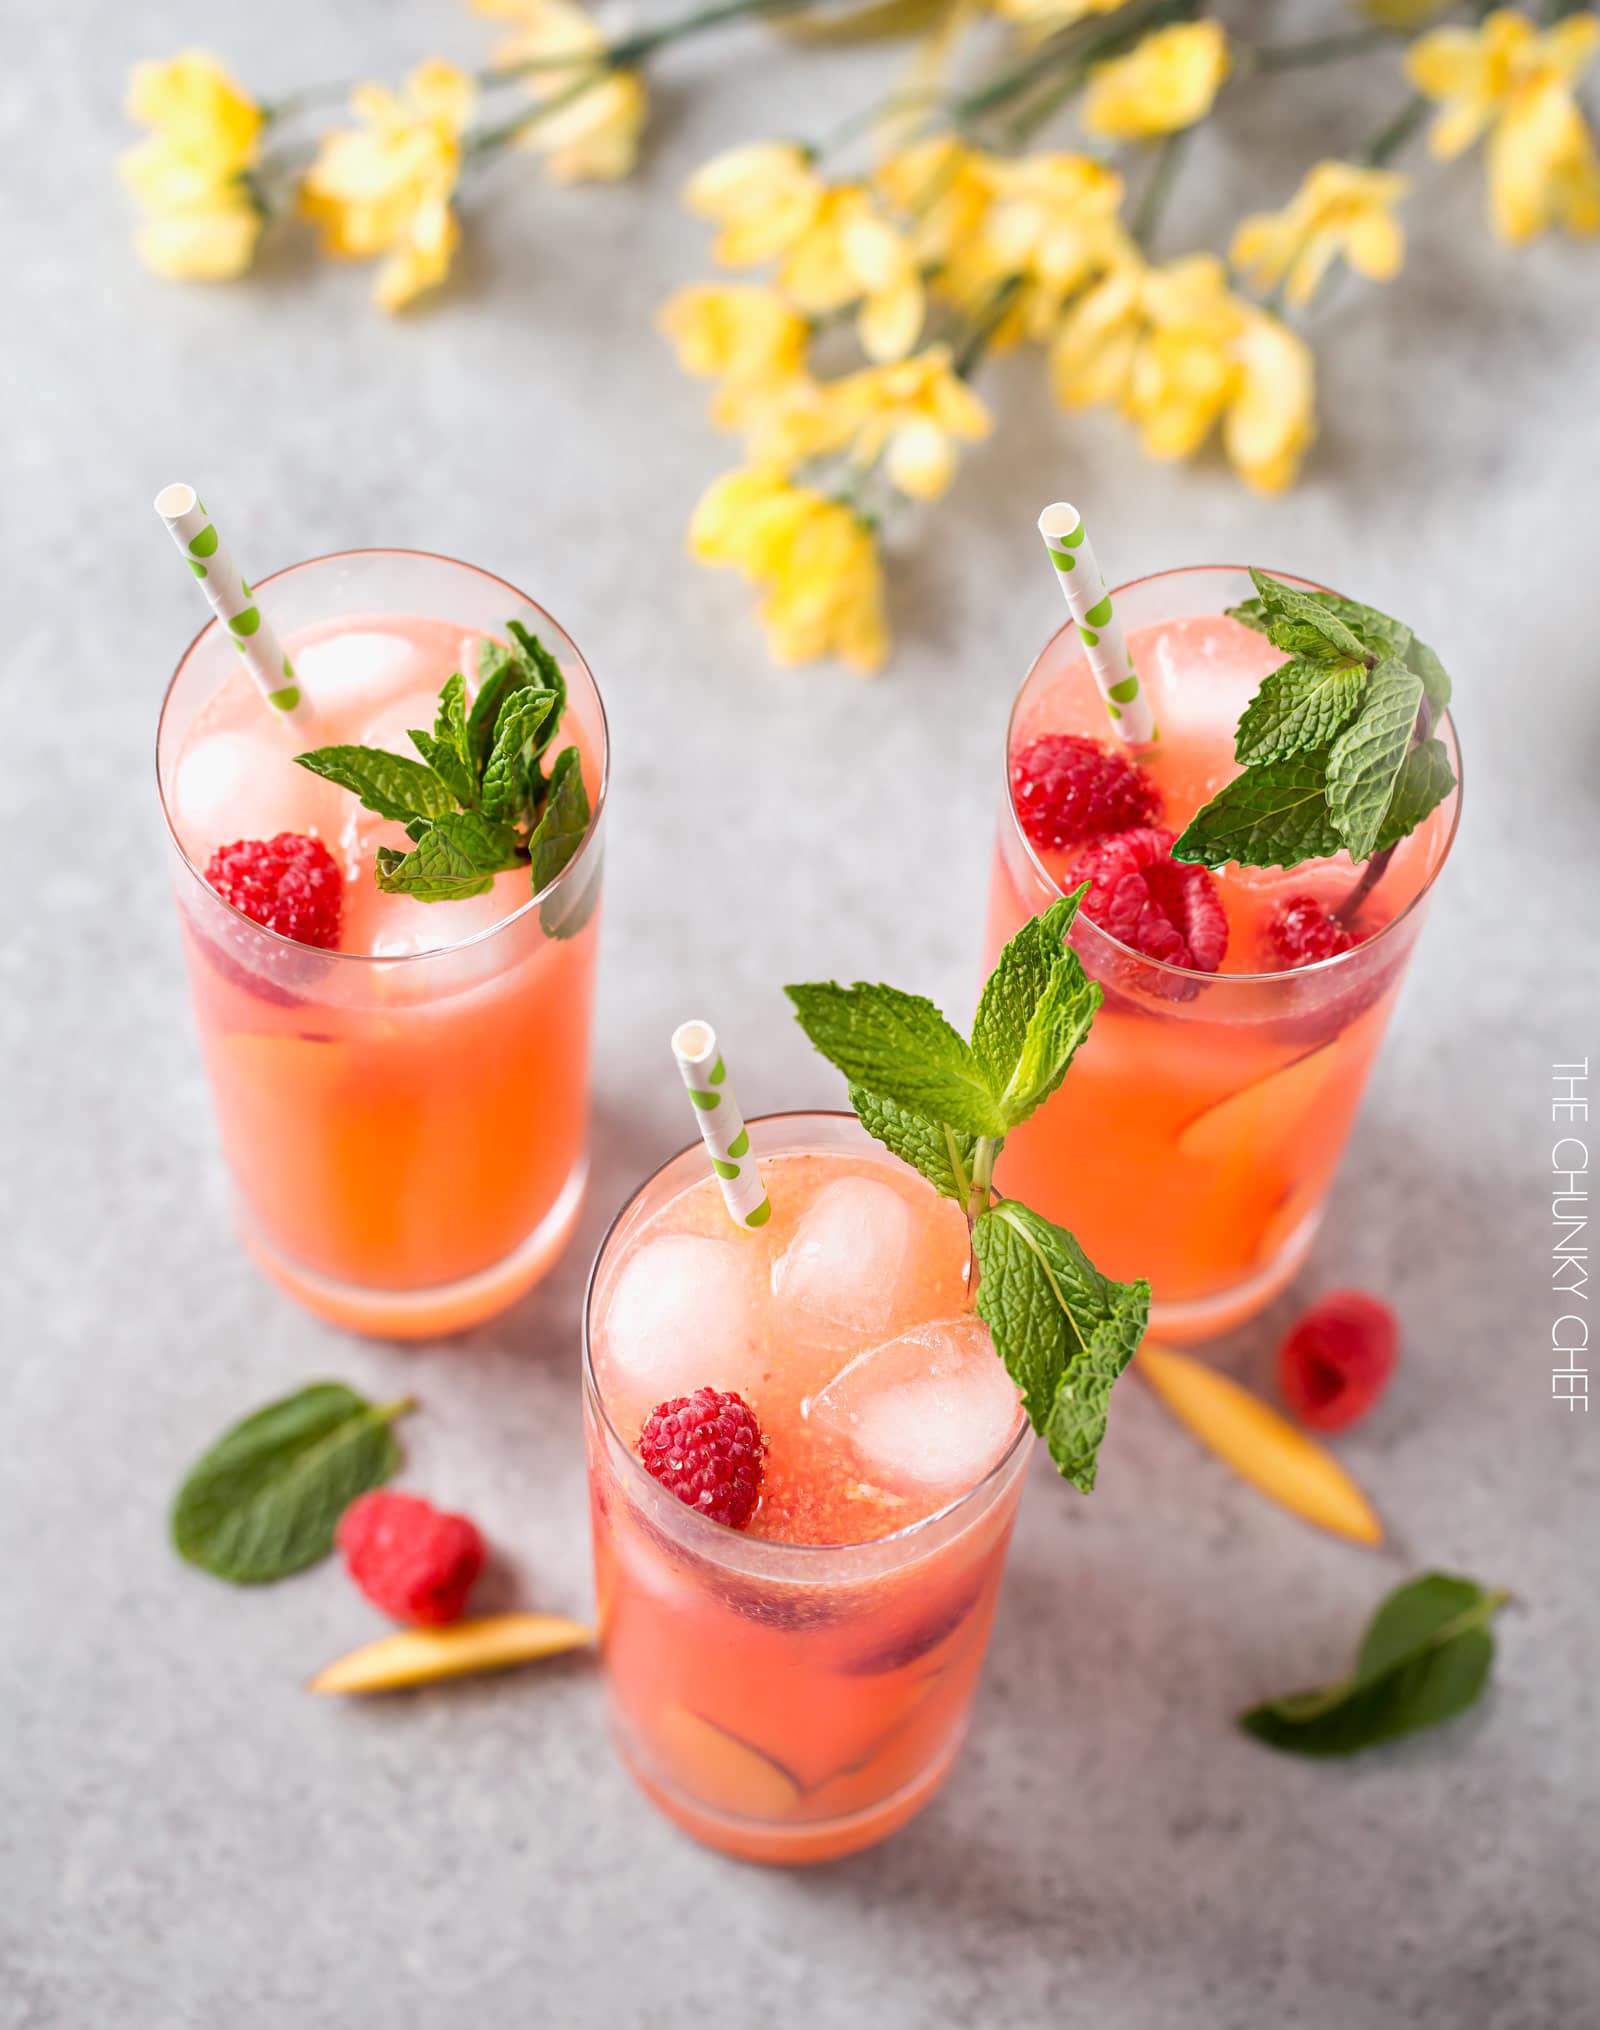 Homemade Raspberry Peach Lemonade